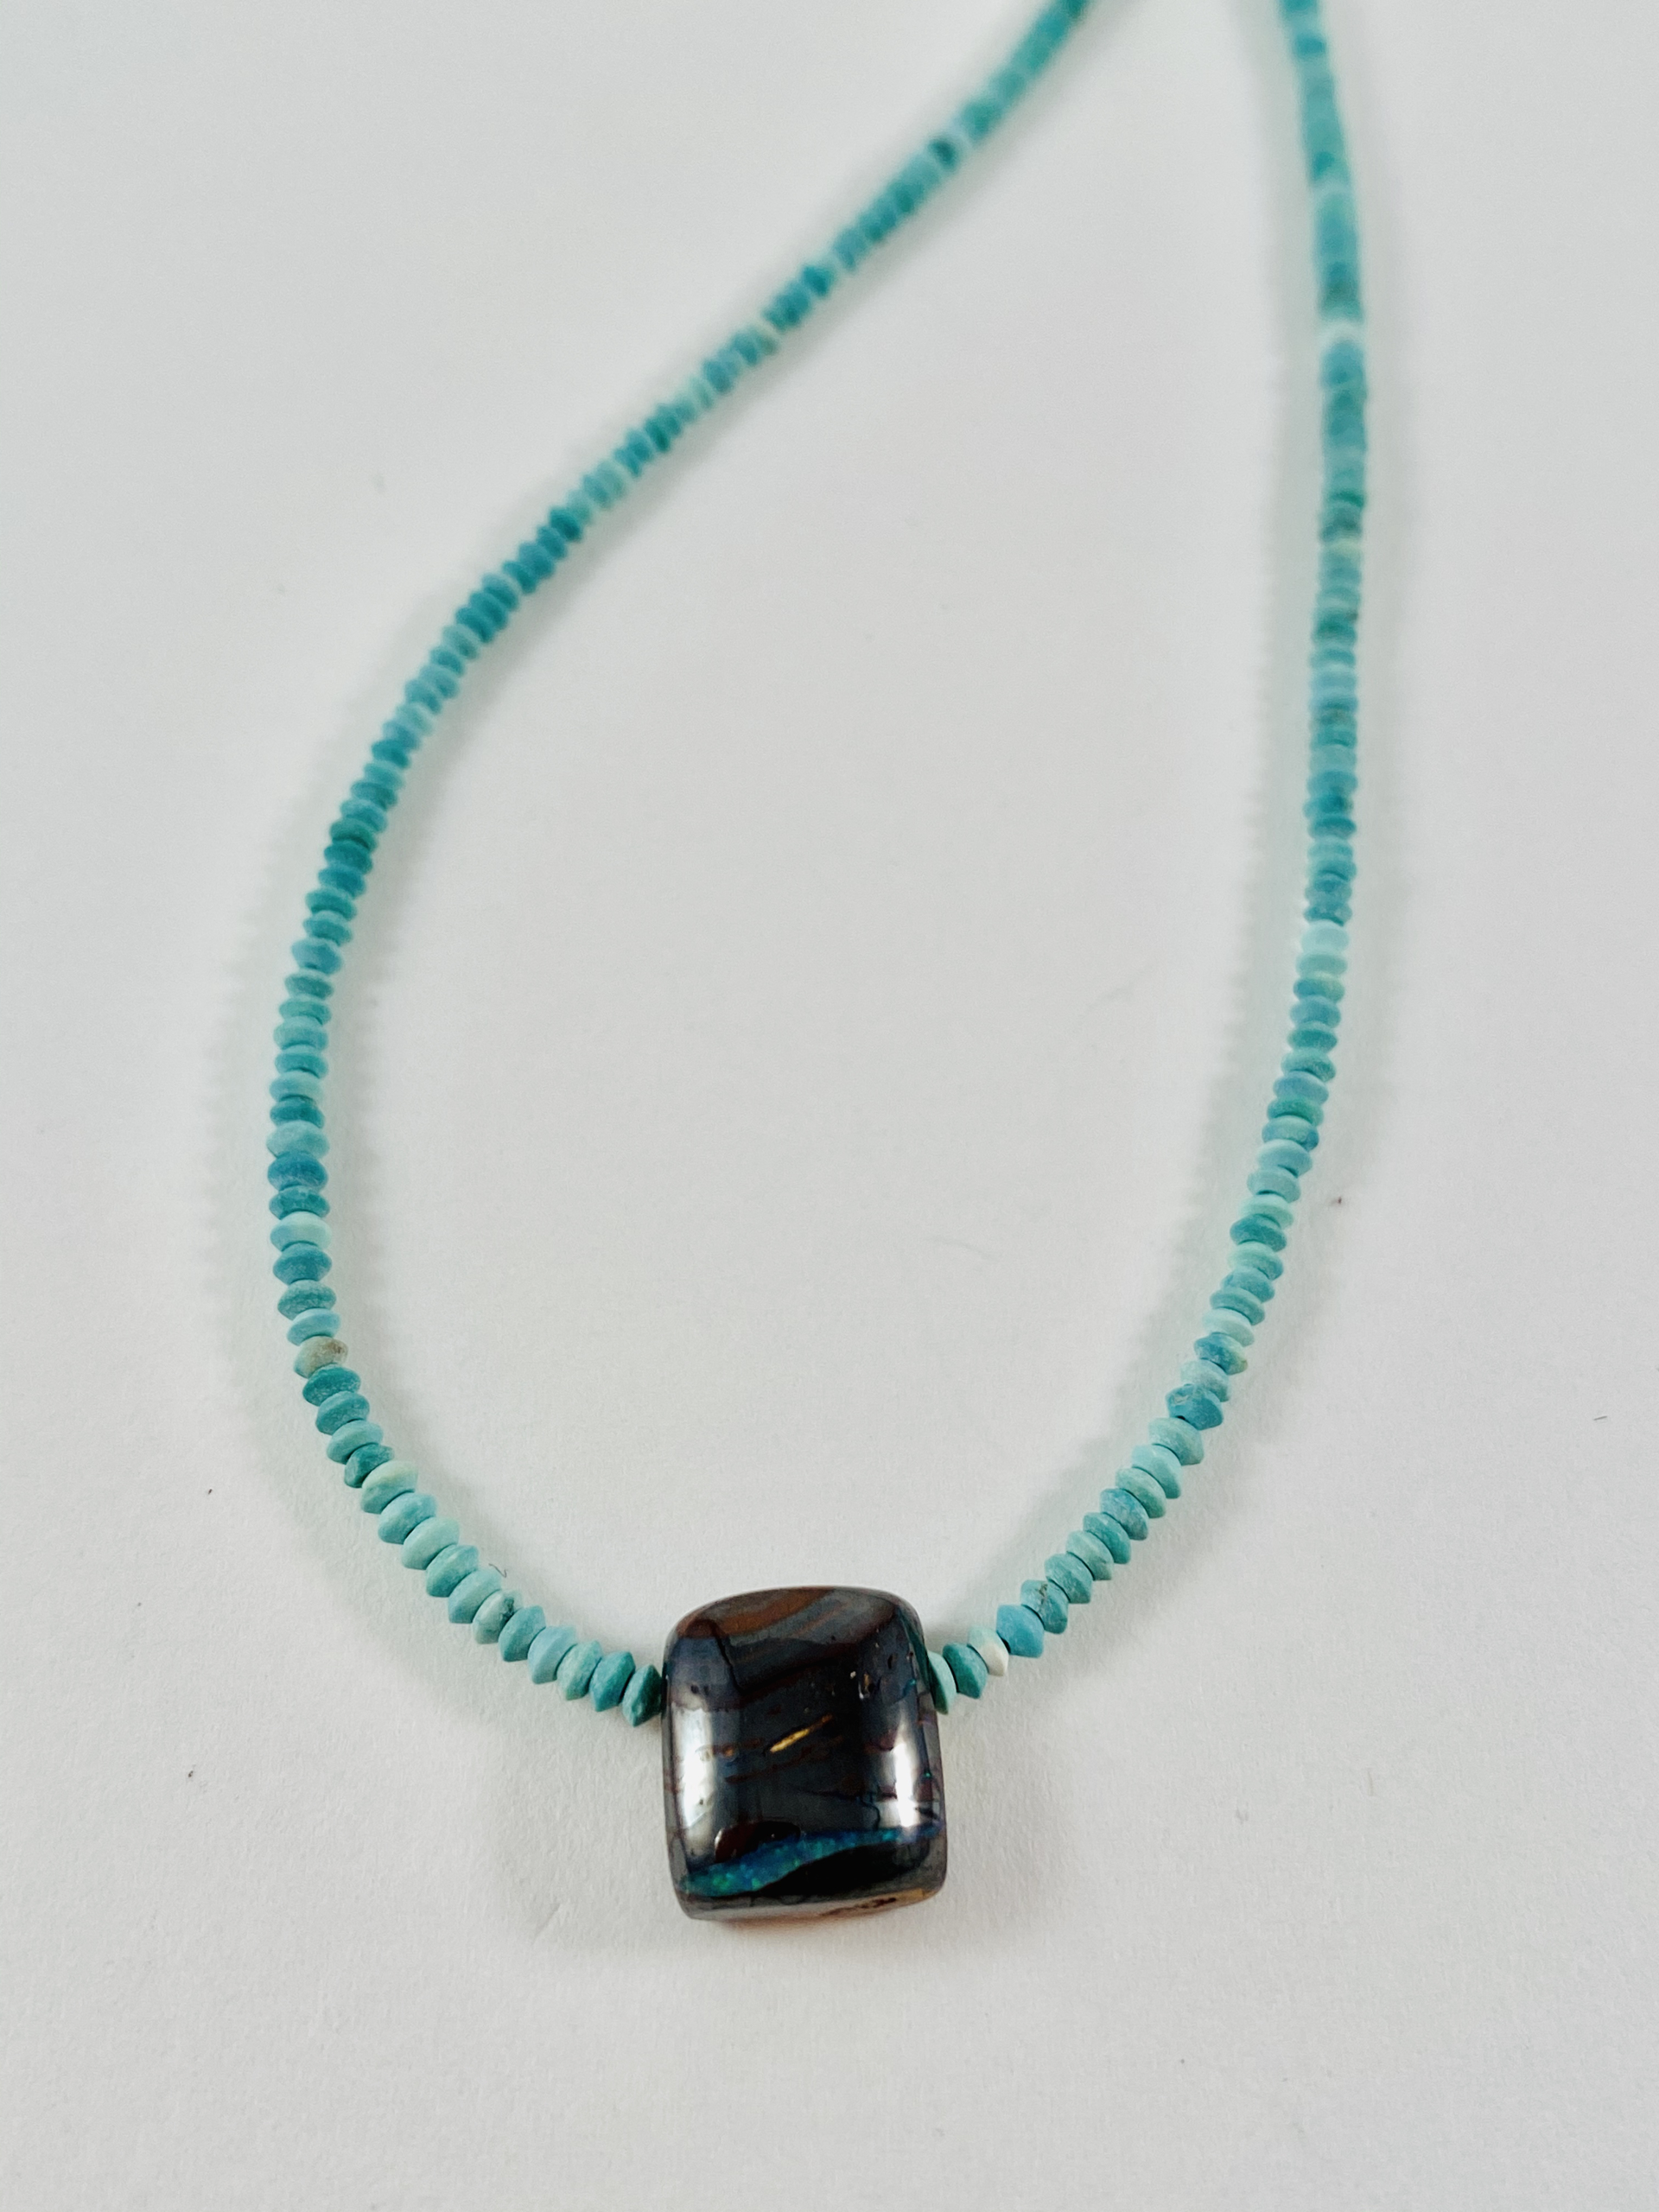 Tiny Turquoise Necklace,  Australian opal pendant by Nance Trueworthy